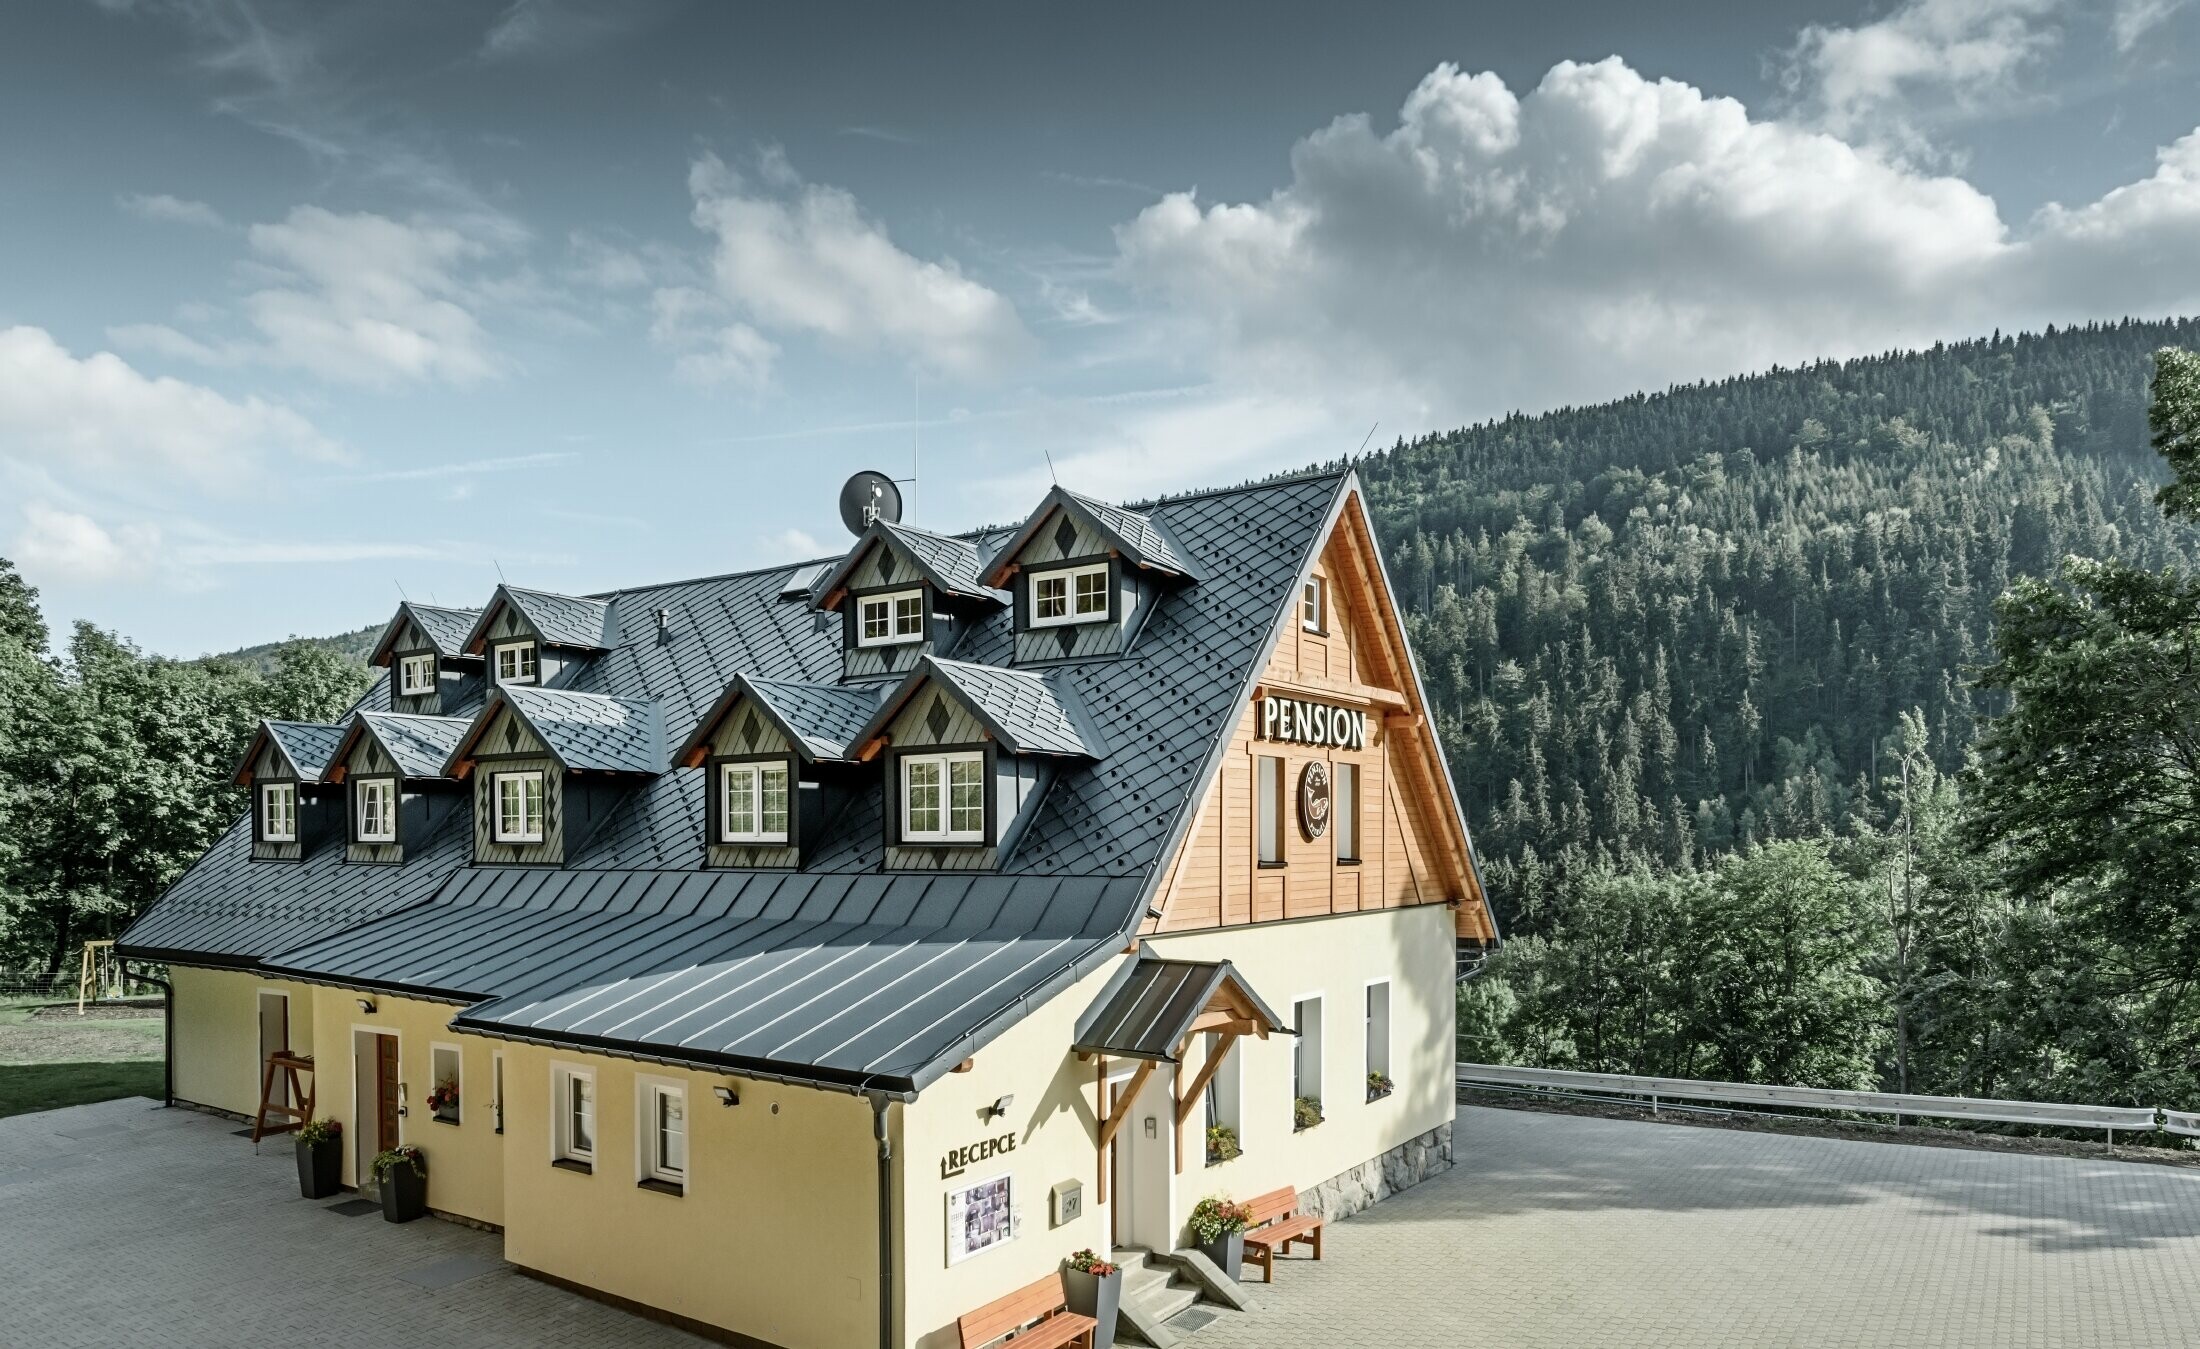 Pansion u Češkoj pokriven strmim krovom i velikim brojem krovnih kućica s aluminijskim krovom PREFA, ljuskastim krovom od rombova sa zaštitom od snijega